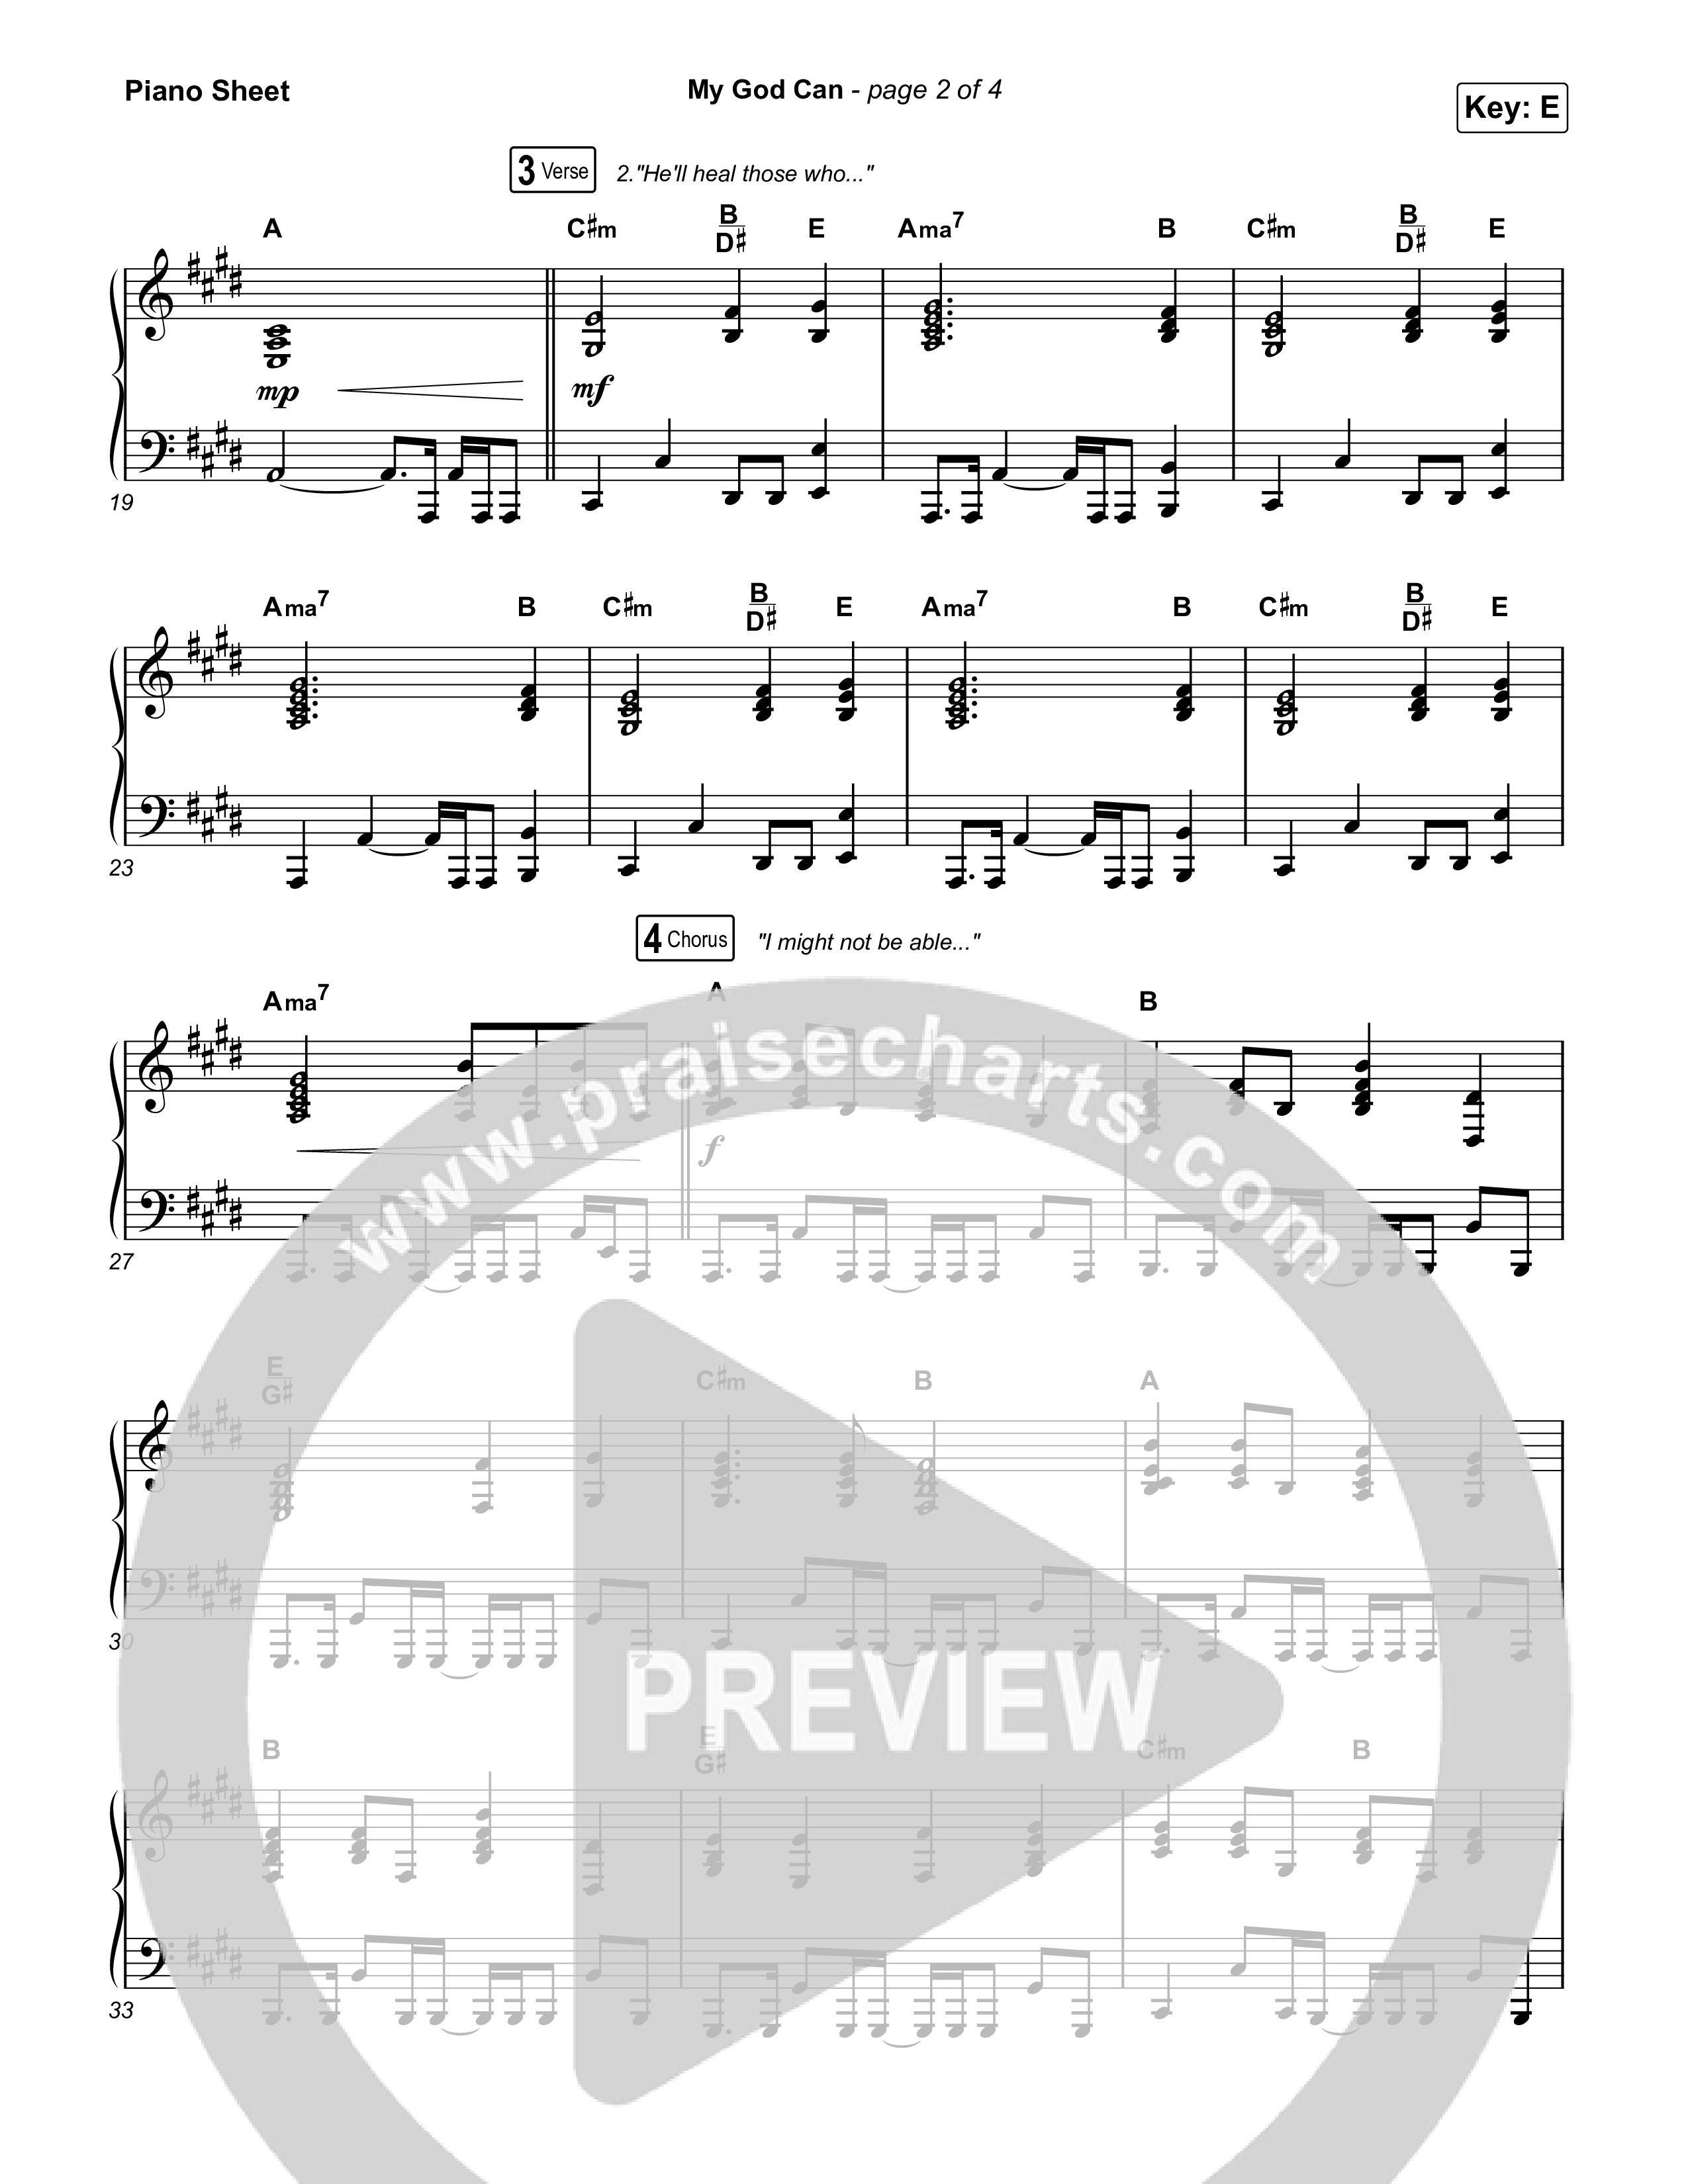 My God Can Sheet Music PDF (Katy Nichole / Naomi Raine) - PraiseCharts